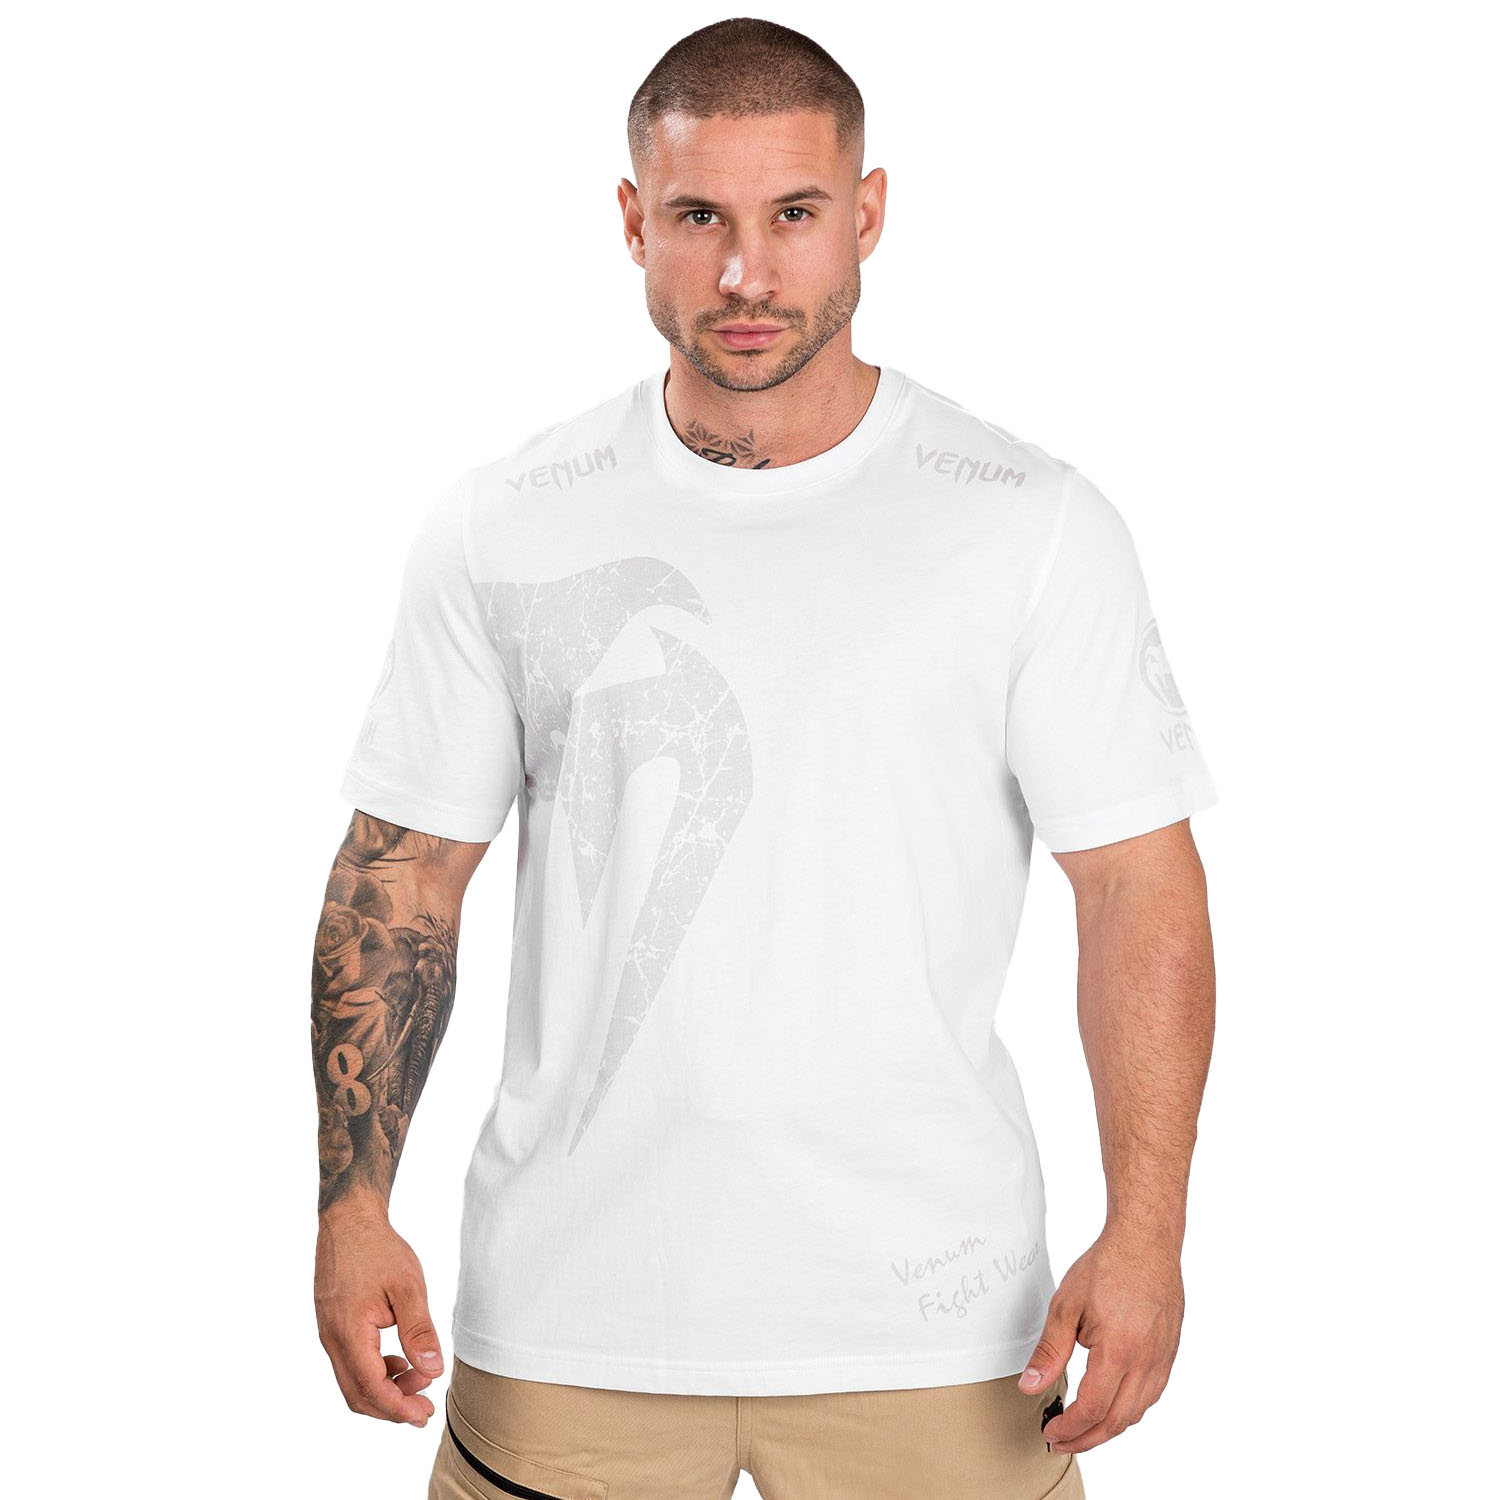 VENUM T-Shirt, Giant, weiß